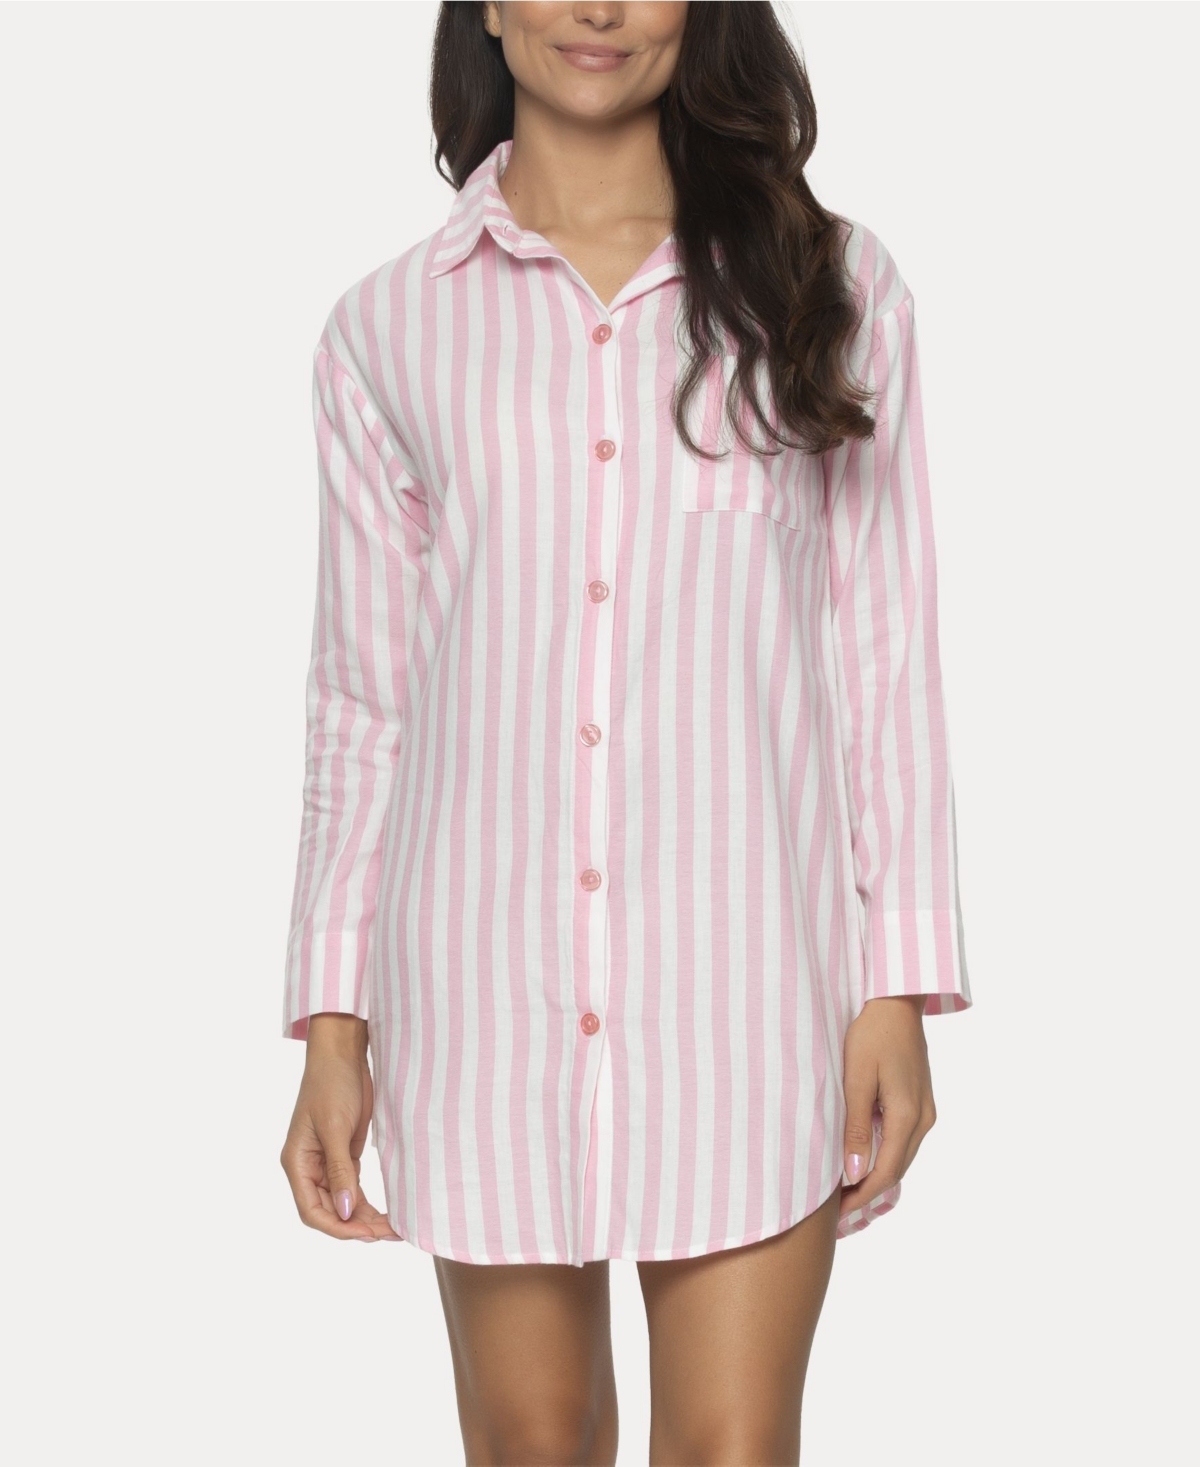 Women's Mirielle Sleep Shirt - White with Gray Pinstripe